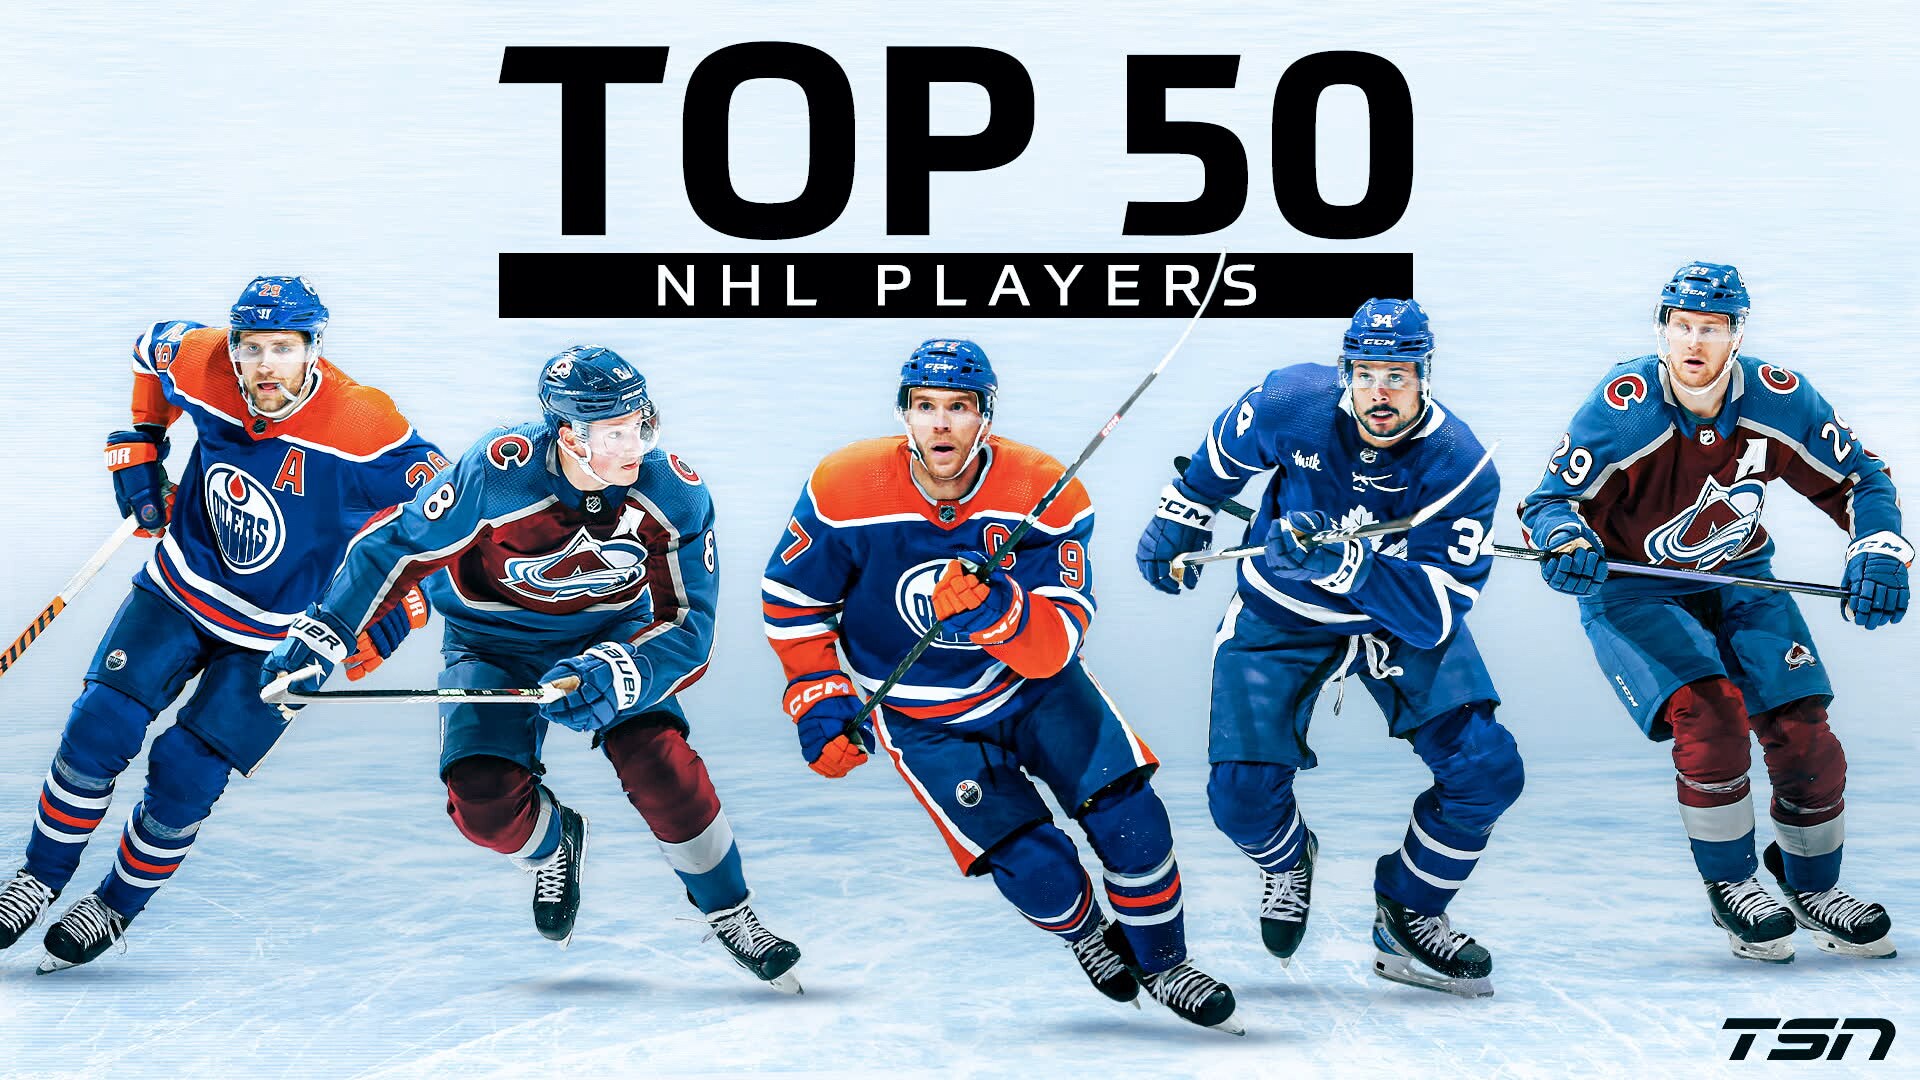 Ranking the Top 50 NHL Players: 2021 Season - Drive4Five